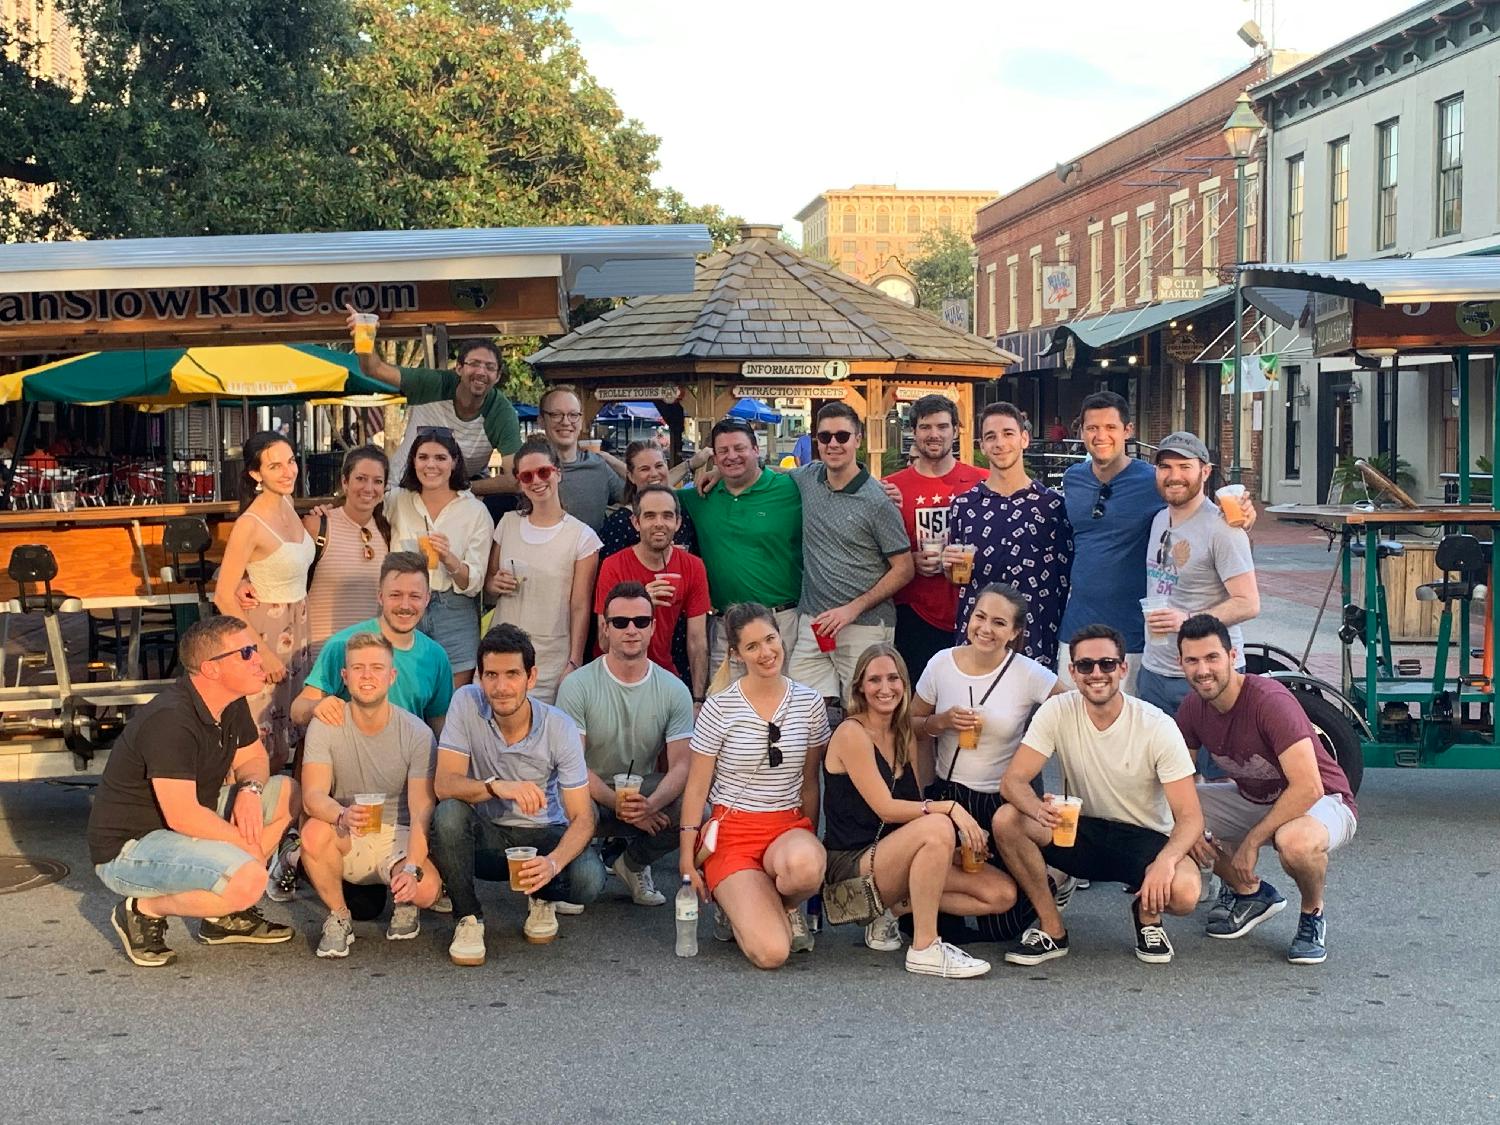 CB4's 2019 annual company trip was to charming Savannah, Georgia